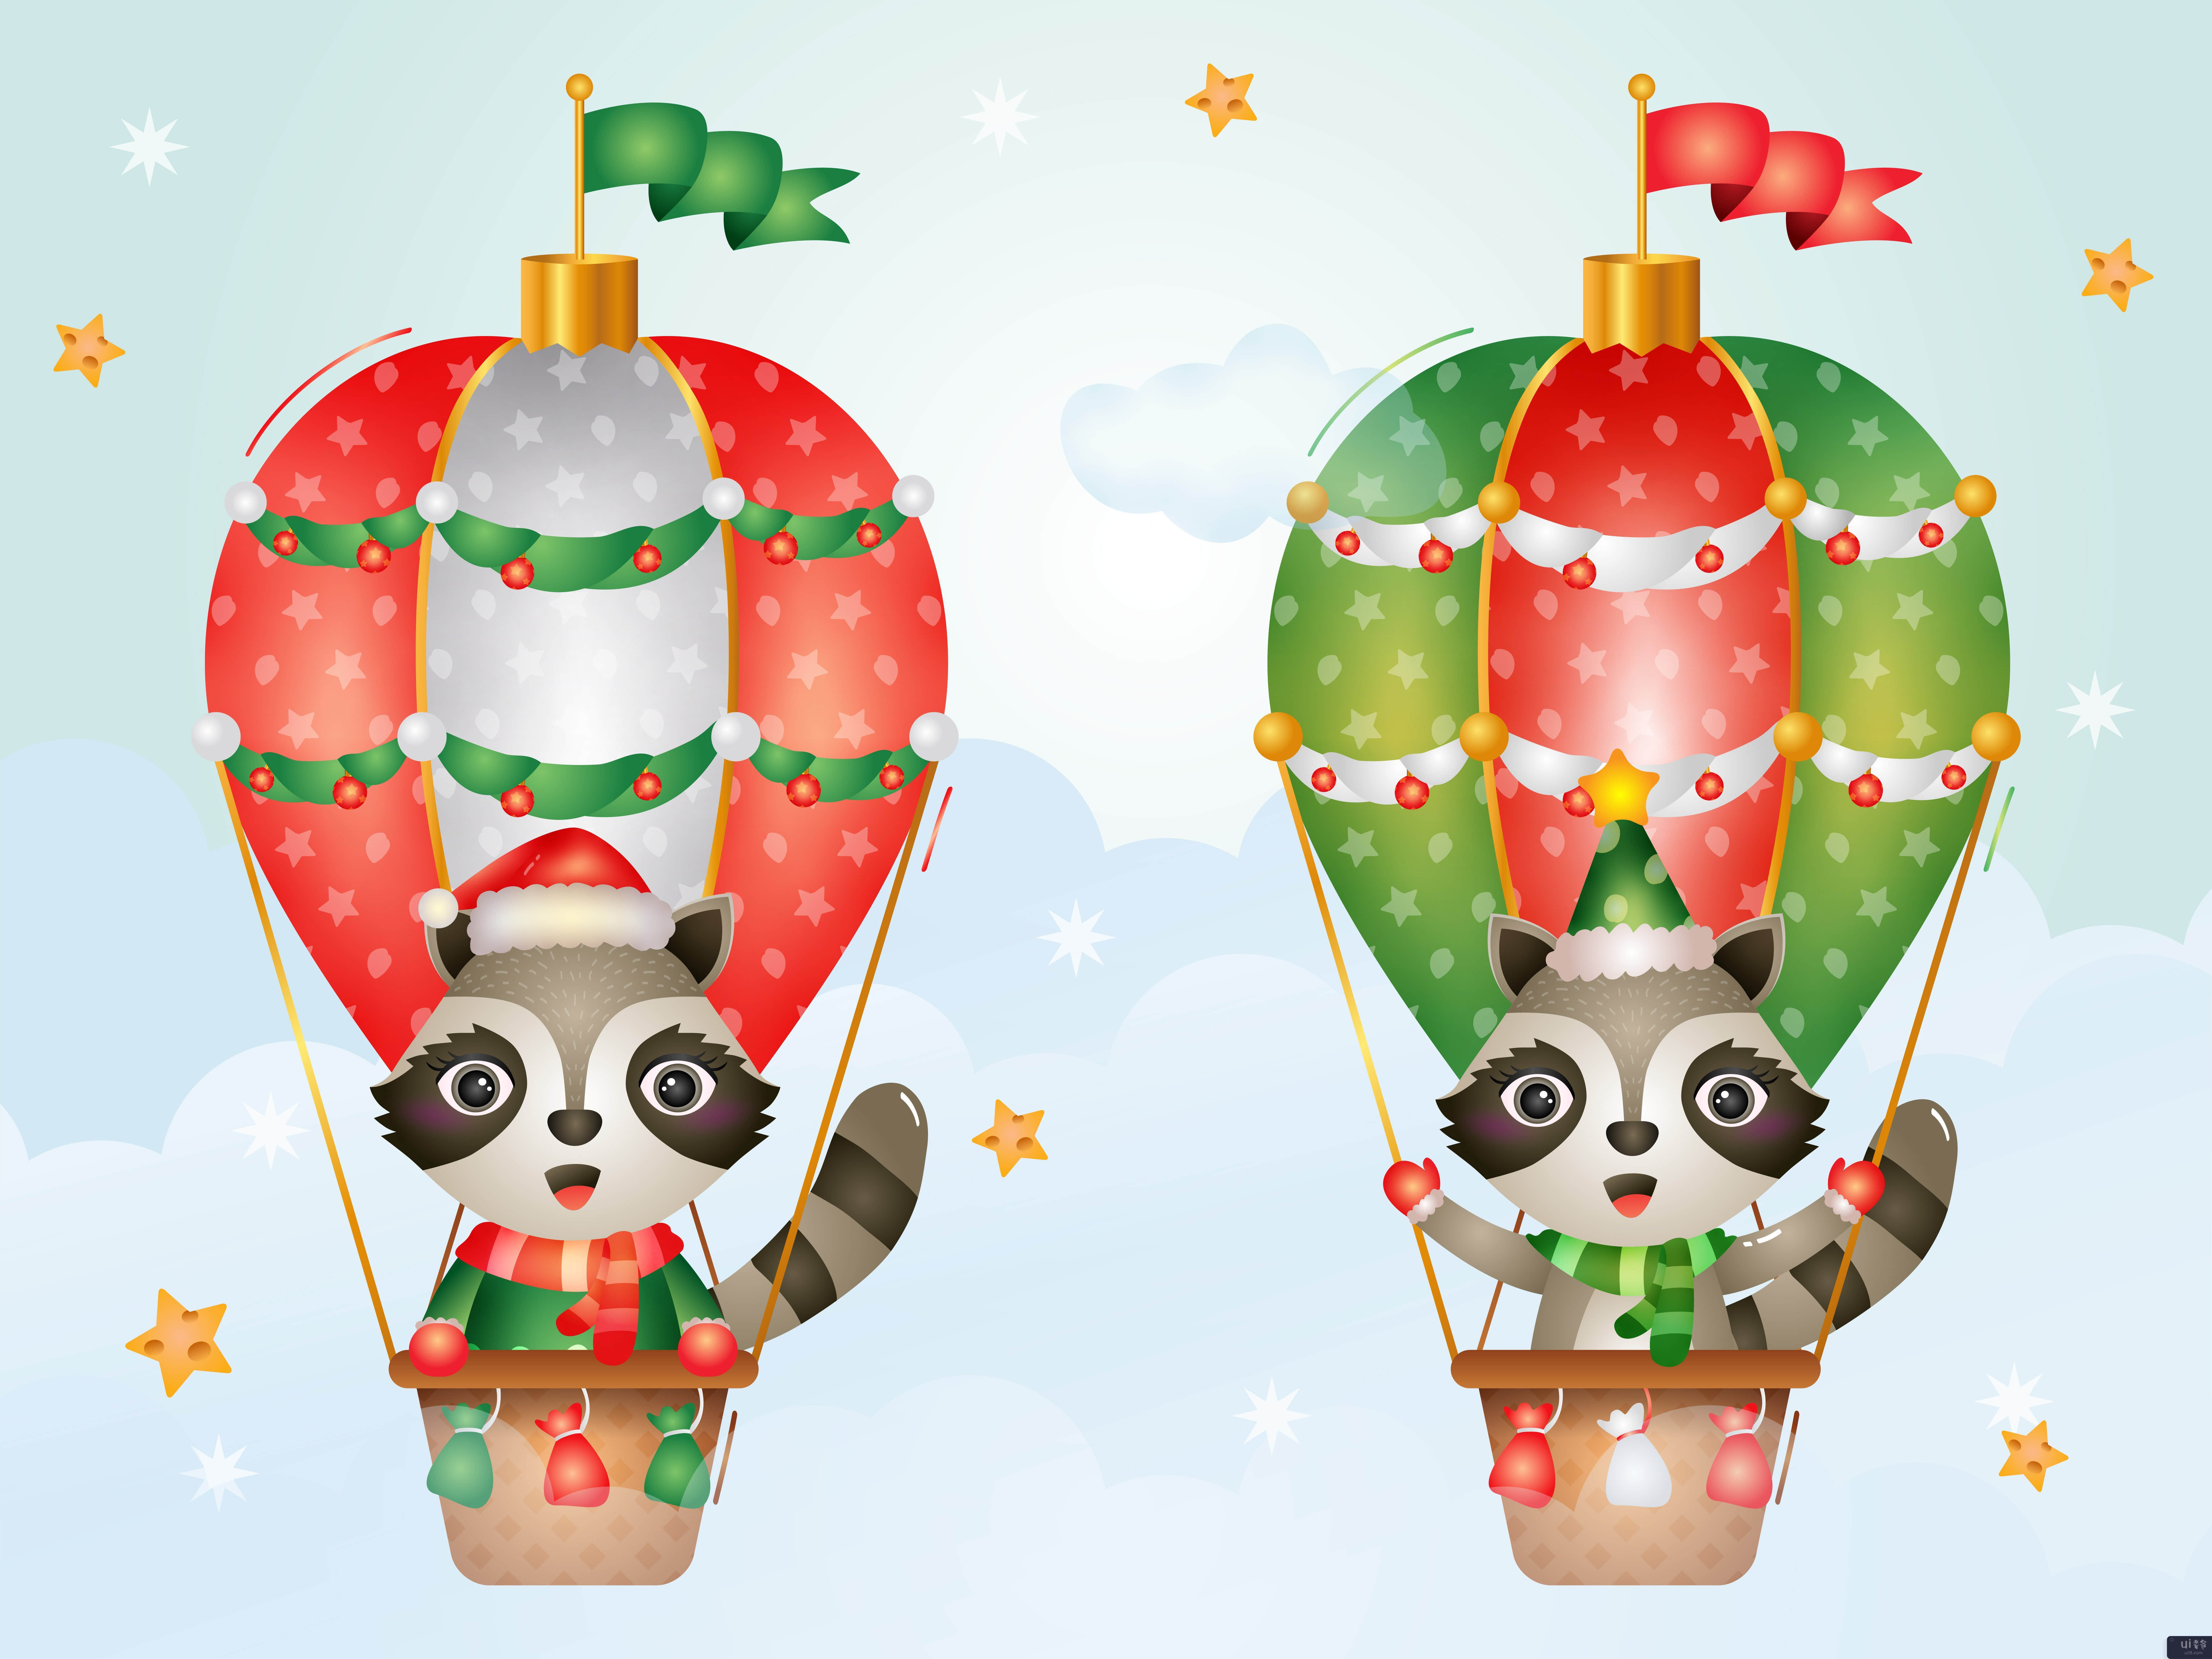 热气球上可爱的浣熊圣诞人物(Cute raccoon christmas characters on hot air balloon)插图